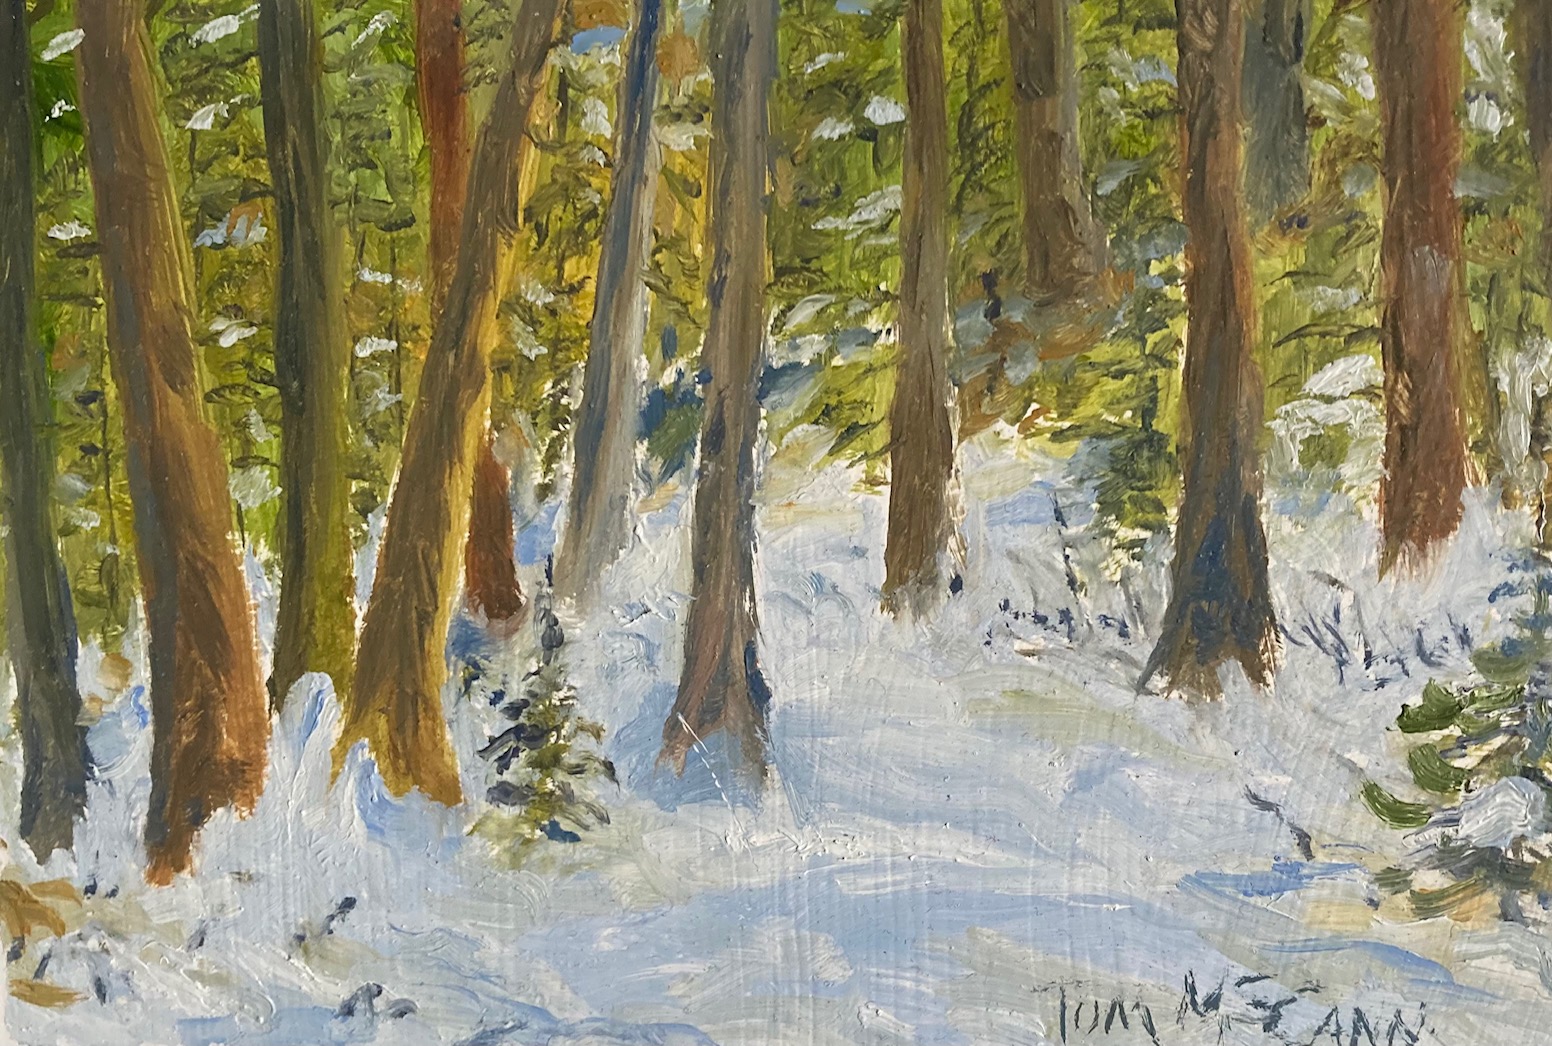 The Woods in Winter, by Tom McCann.